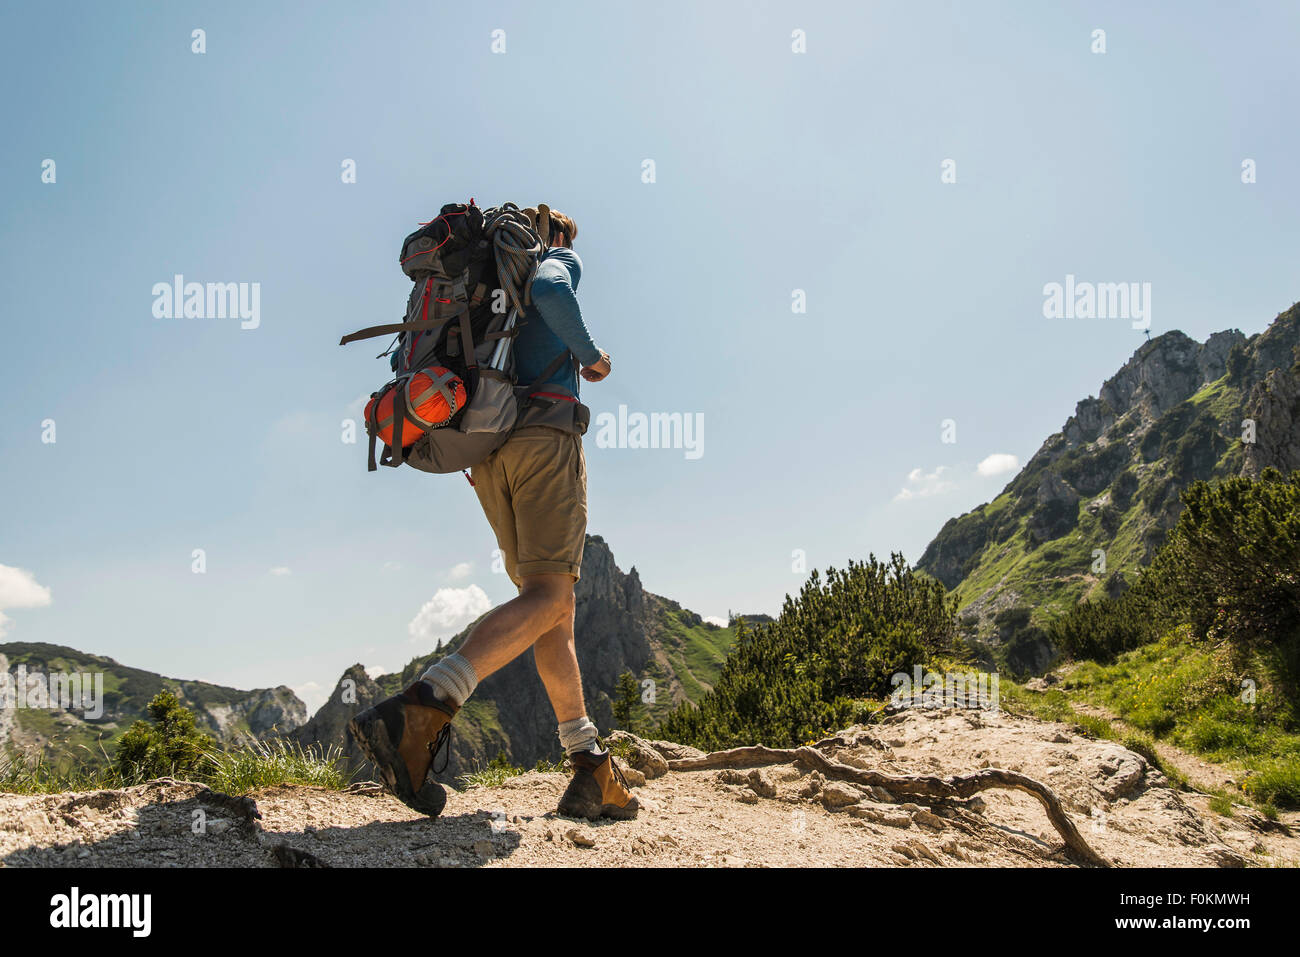 Austria, Tyrol, Tannheimer Tal, young man hiking on mountain trail Stock Photo